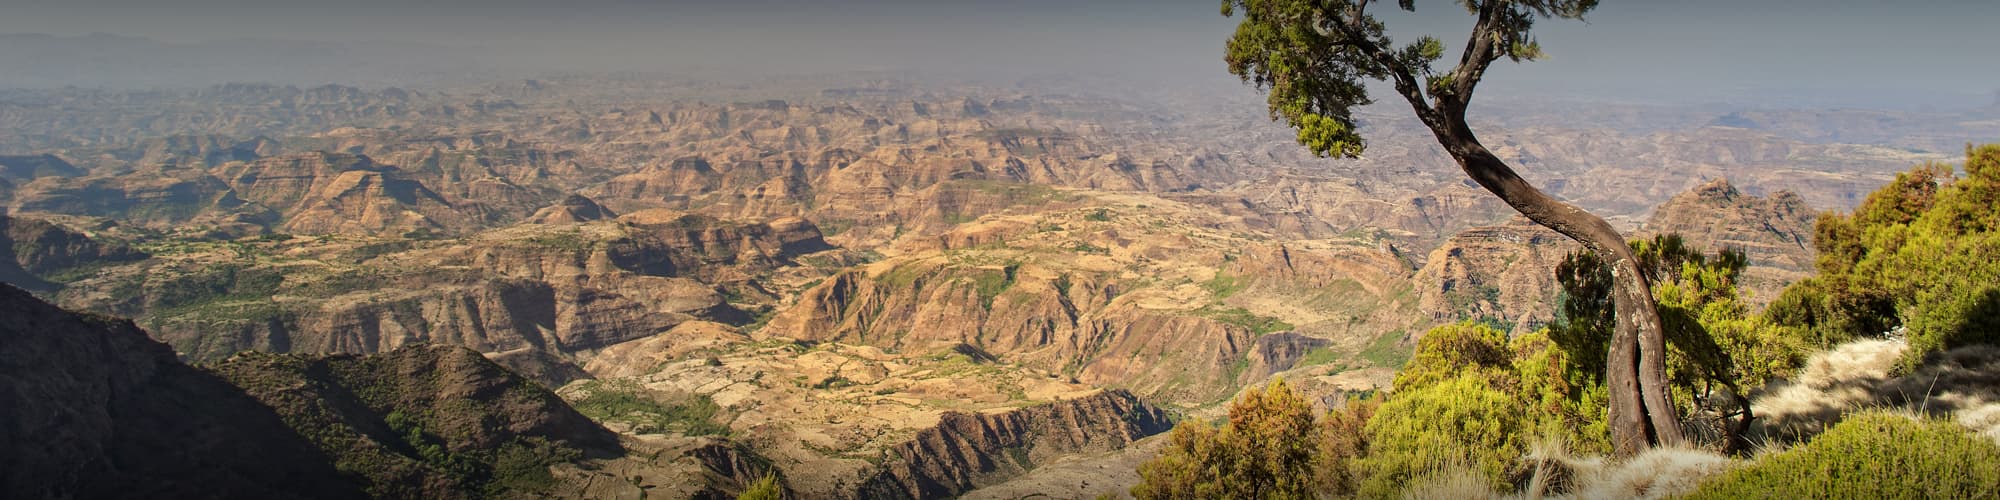 Trek Ethiopie © Guenter Guni / iStock 